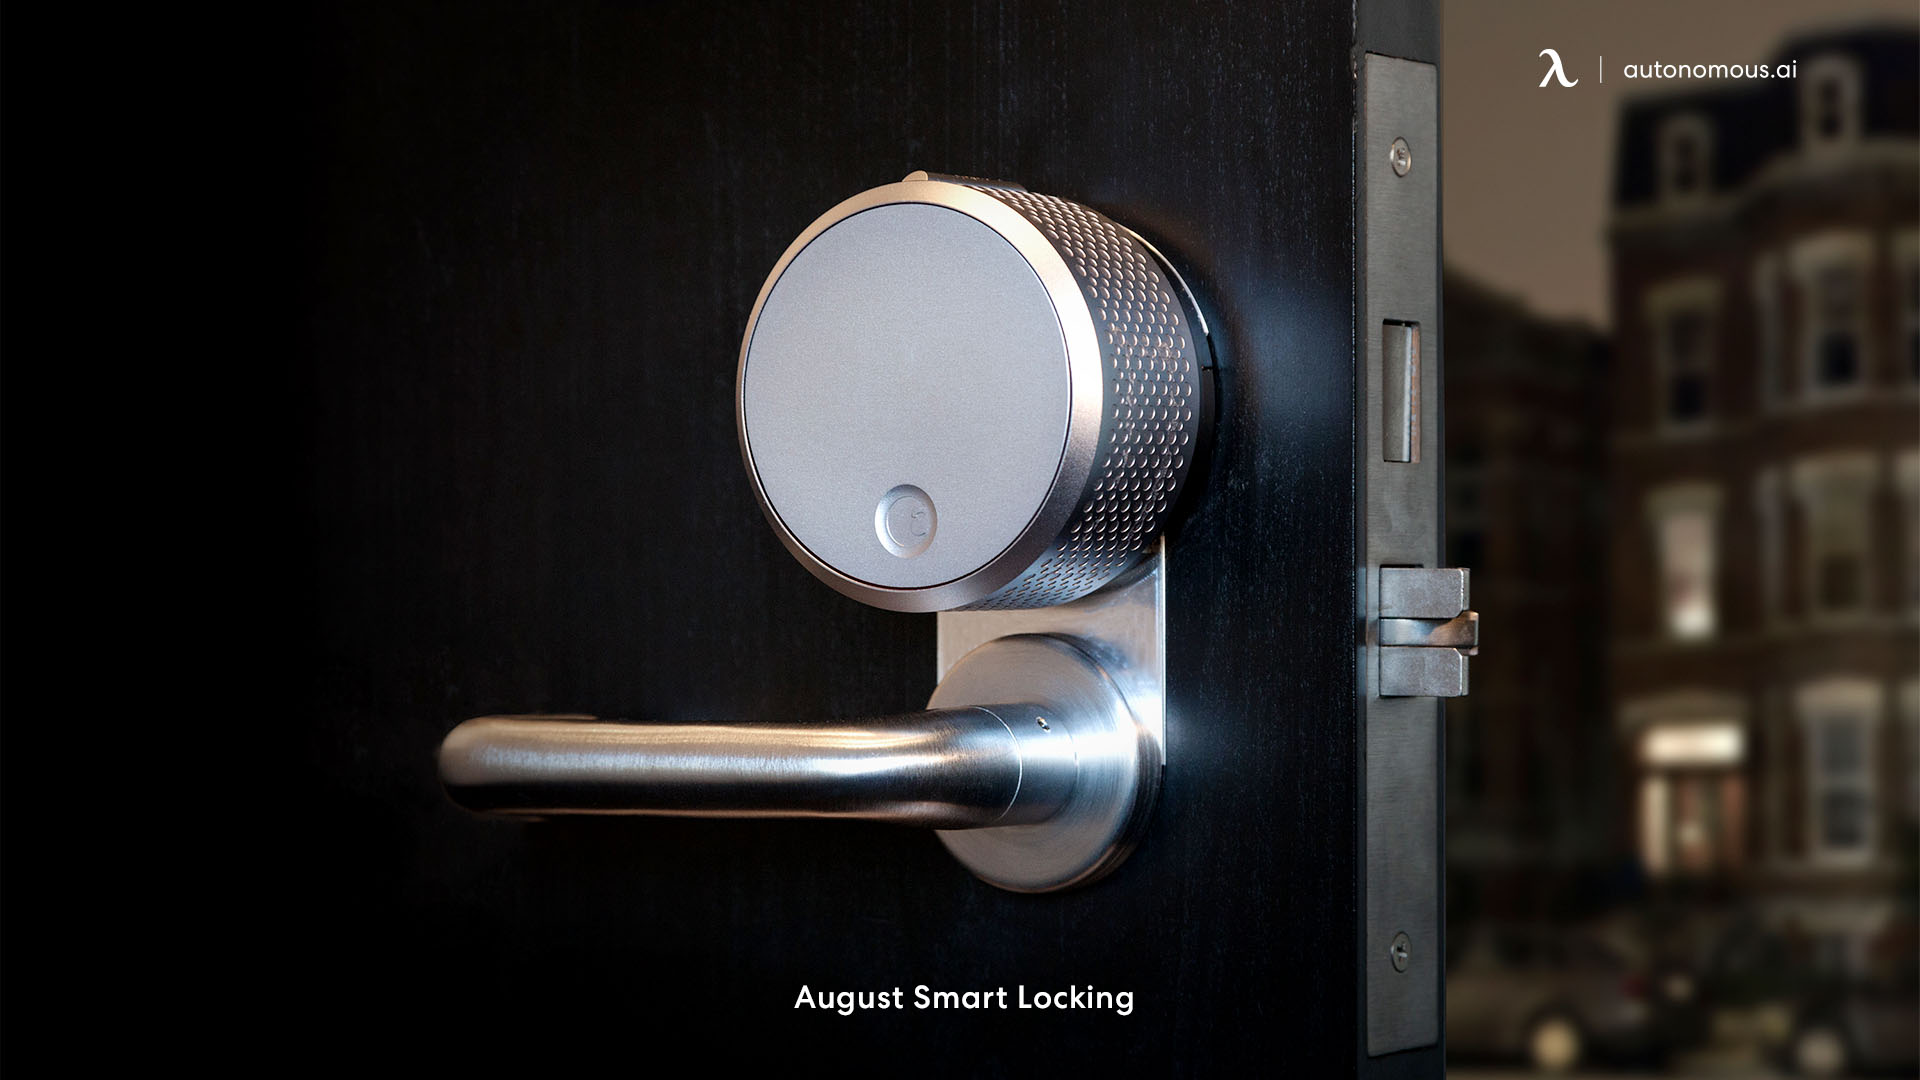 August Smart Locking smart home office ideas